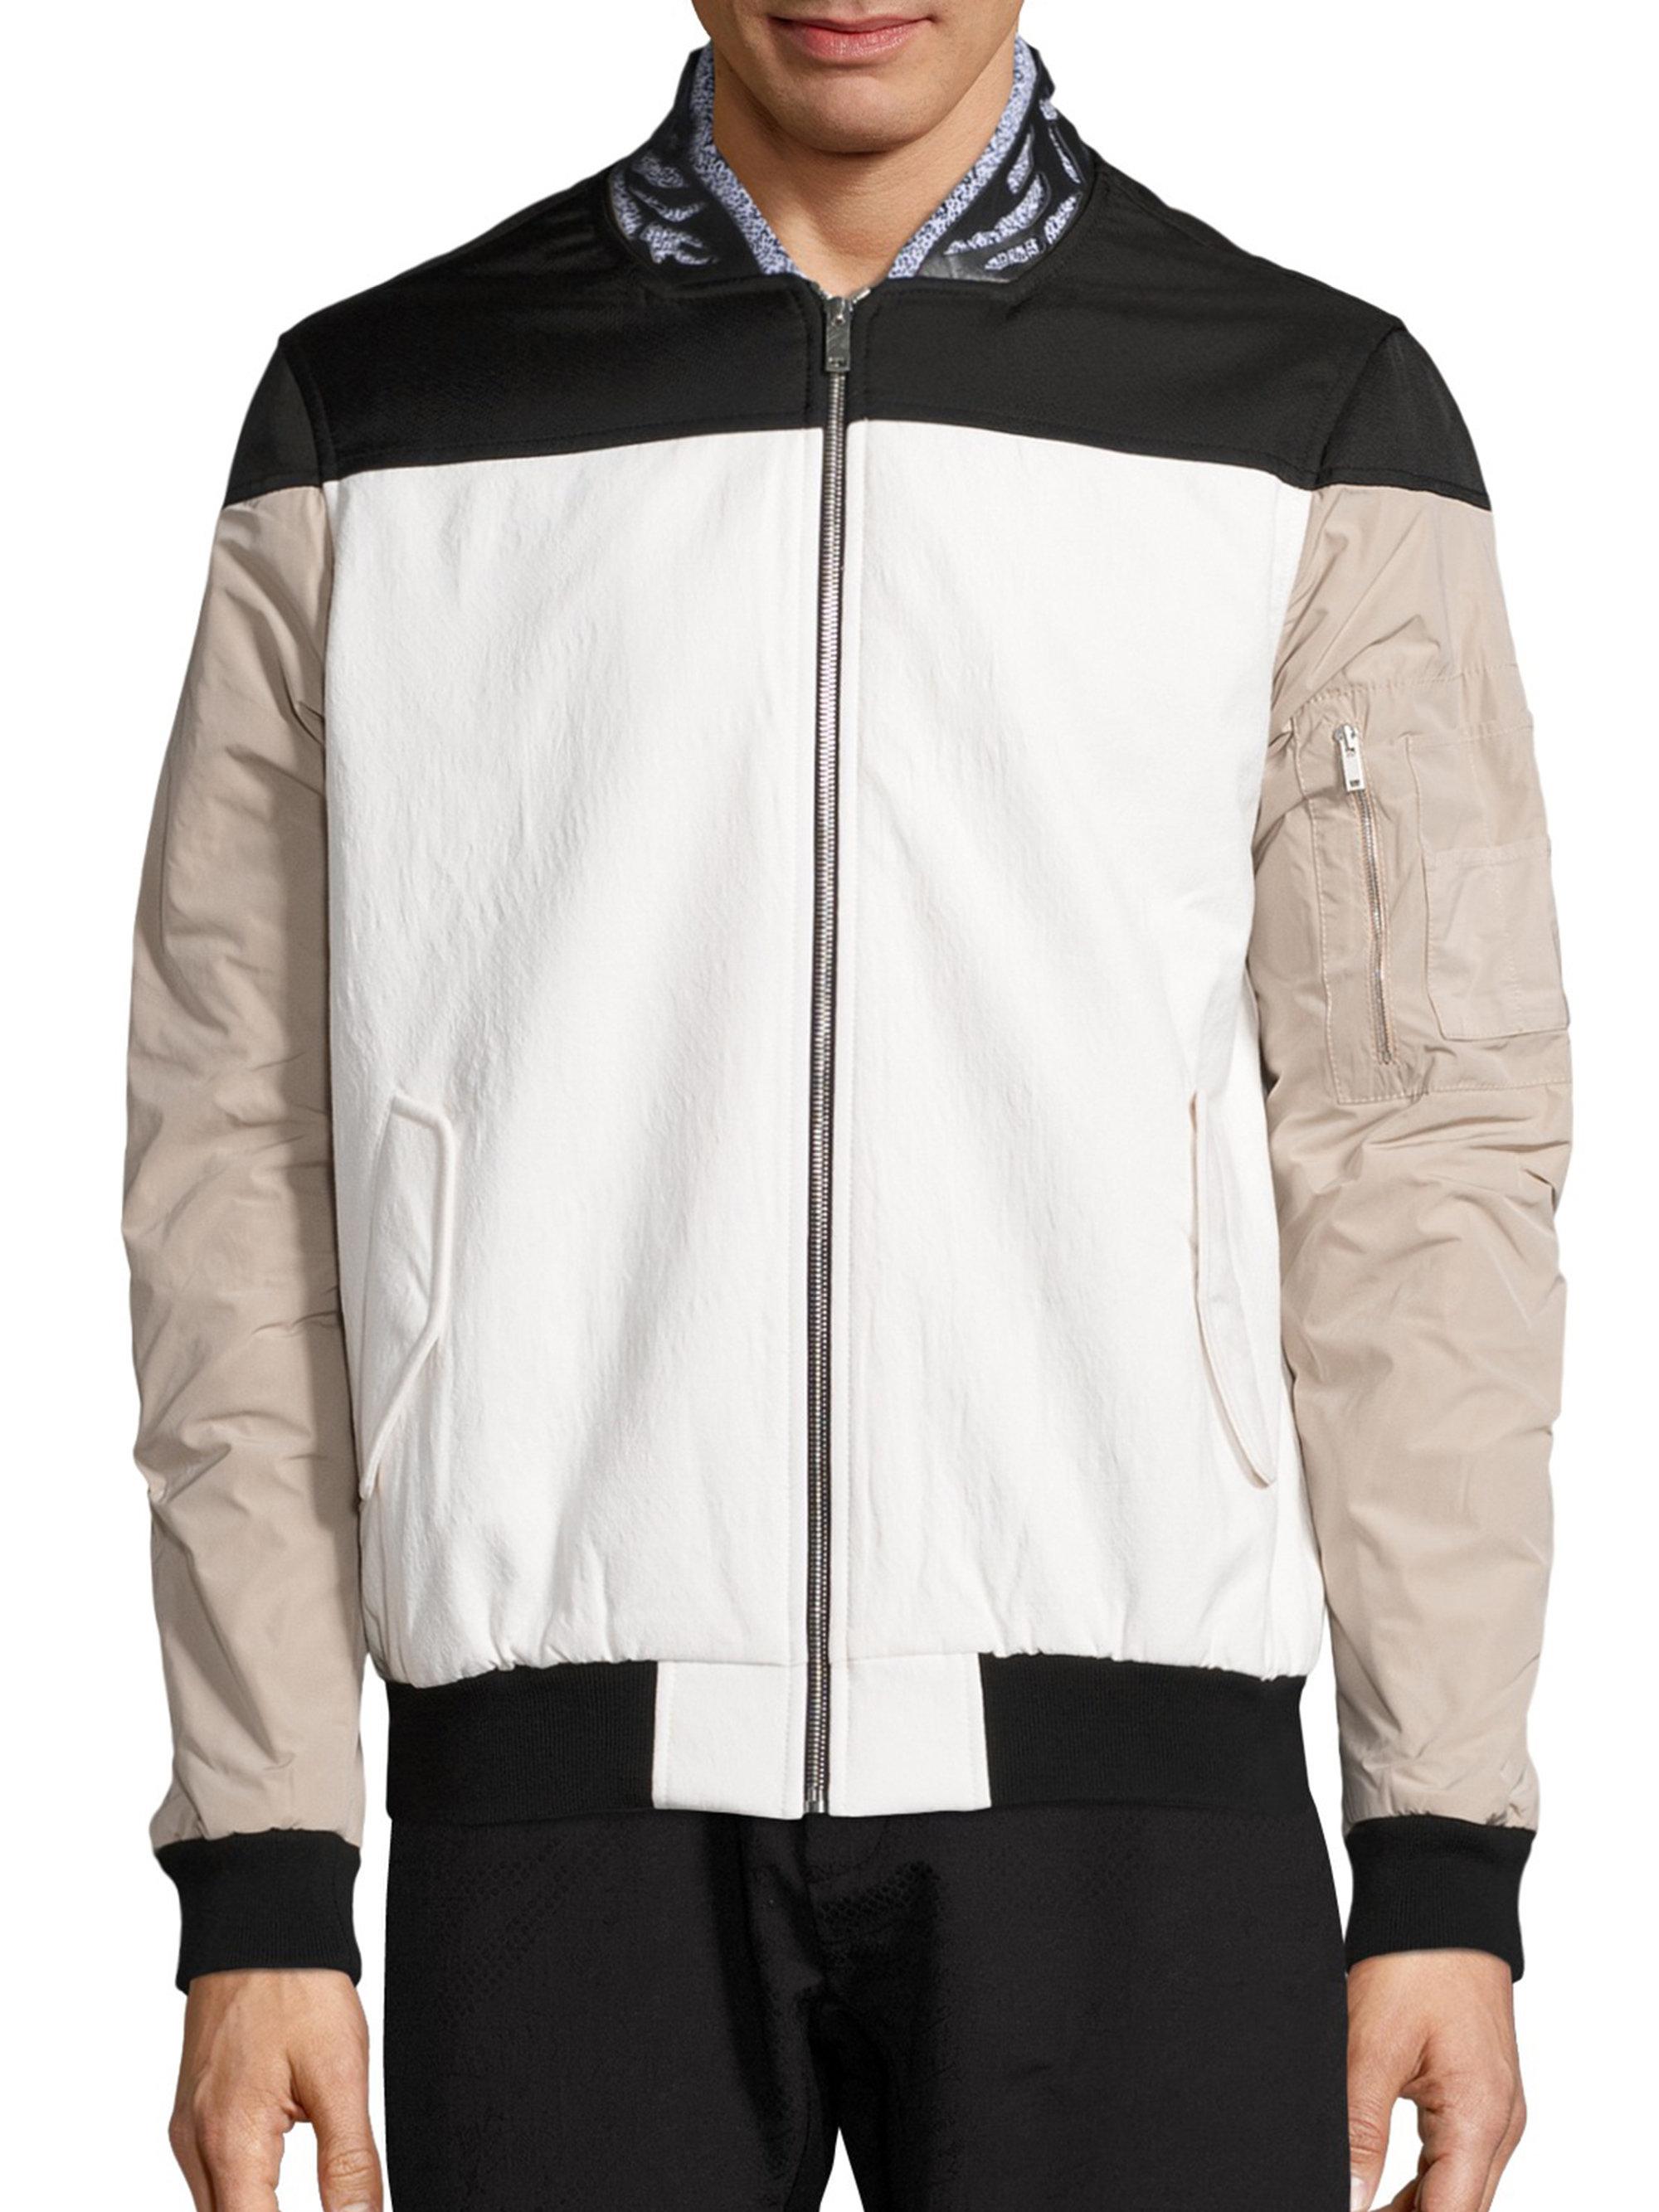 Les Benjamins Leather Collar Bomber Jacket in White for Men - Lyst